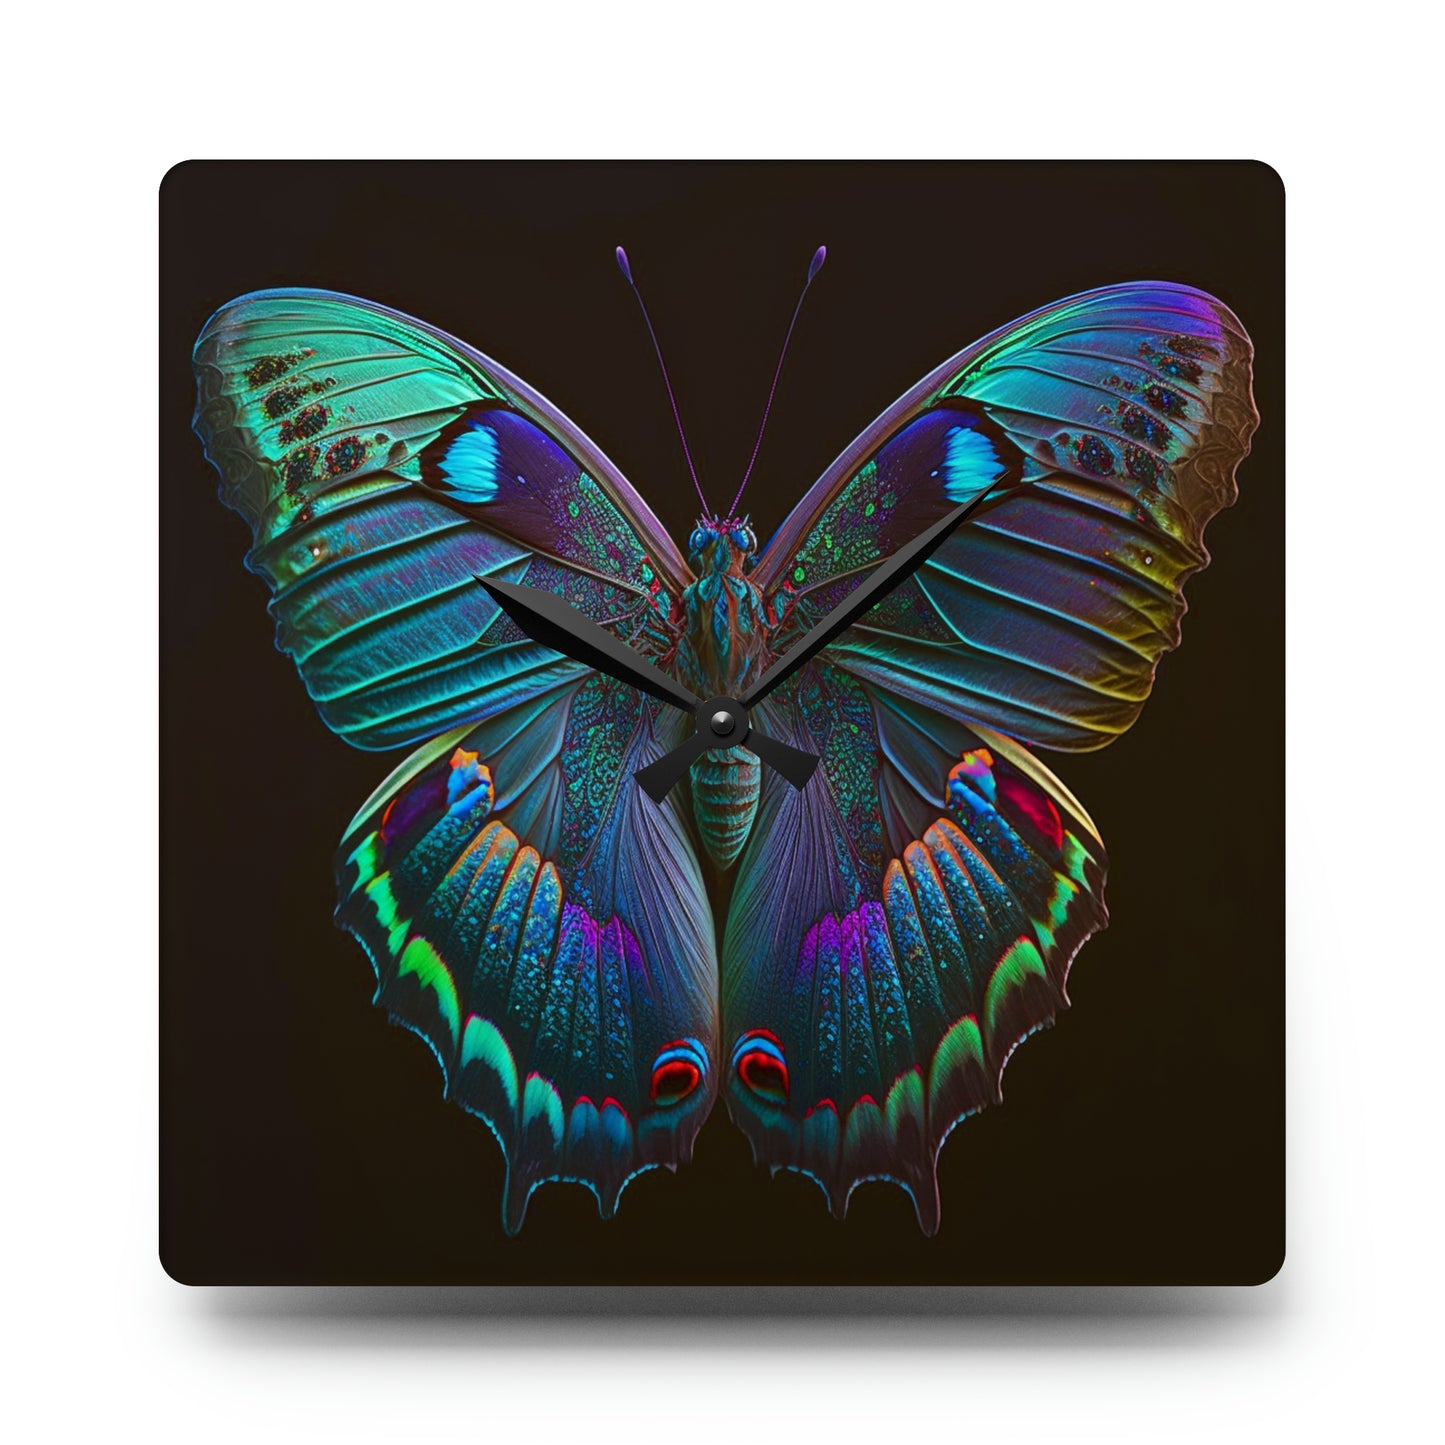 Acrylic Wall Clock Hue Neon Butterfly 4